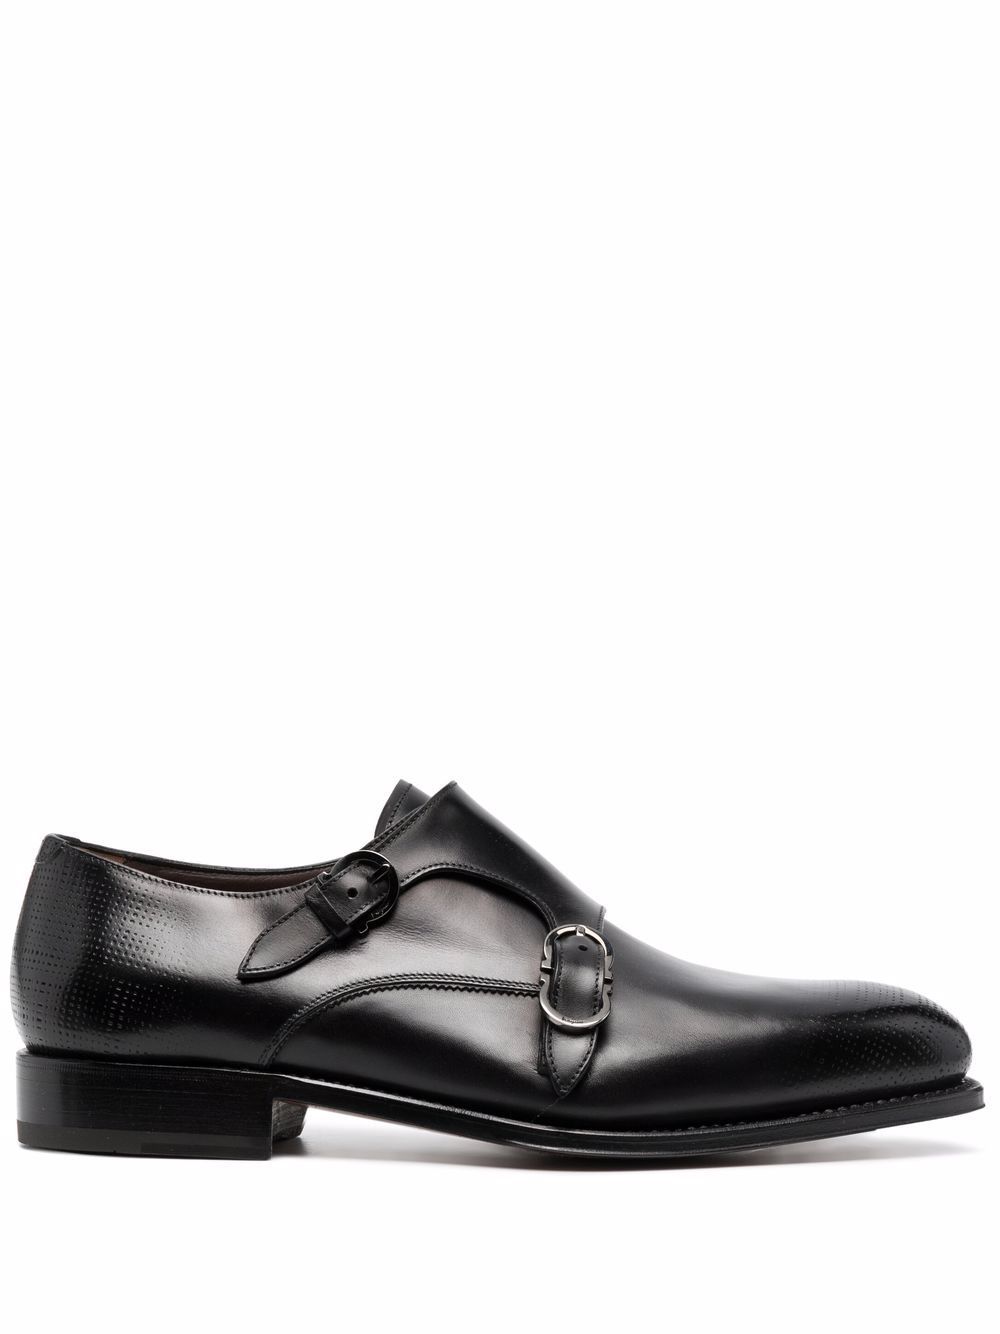 Salvatore Ferragamo Gancini Double Monkstrap Shoes, $795 | farfetch.com ...